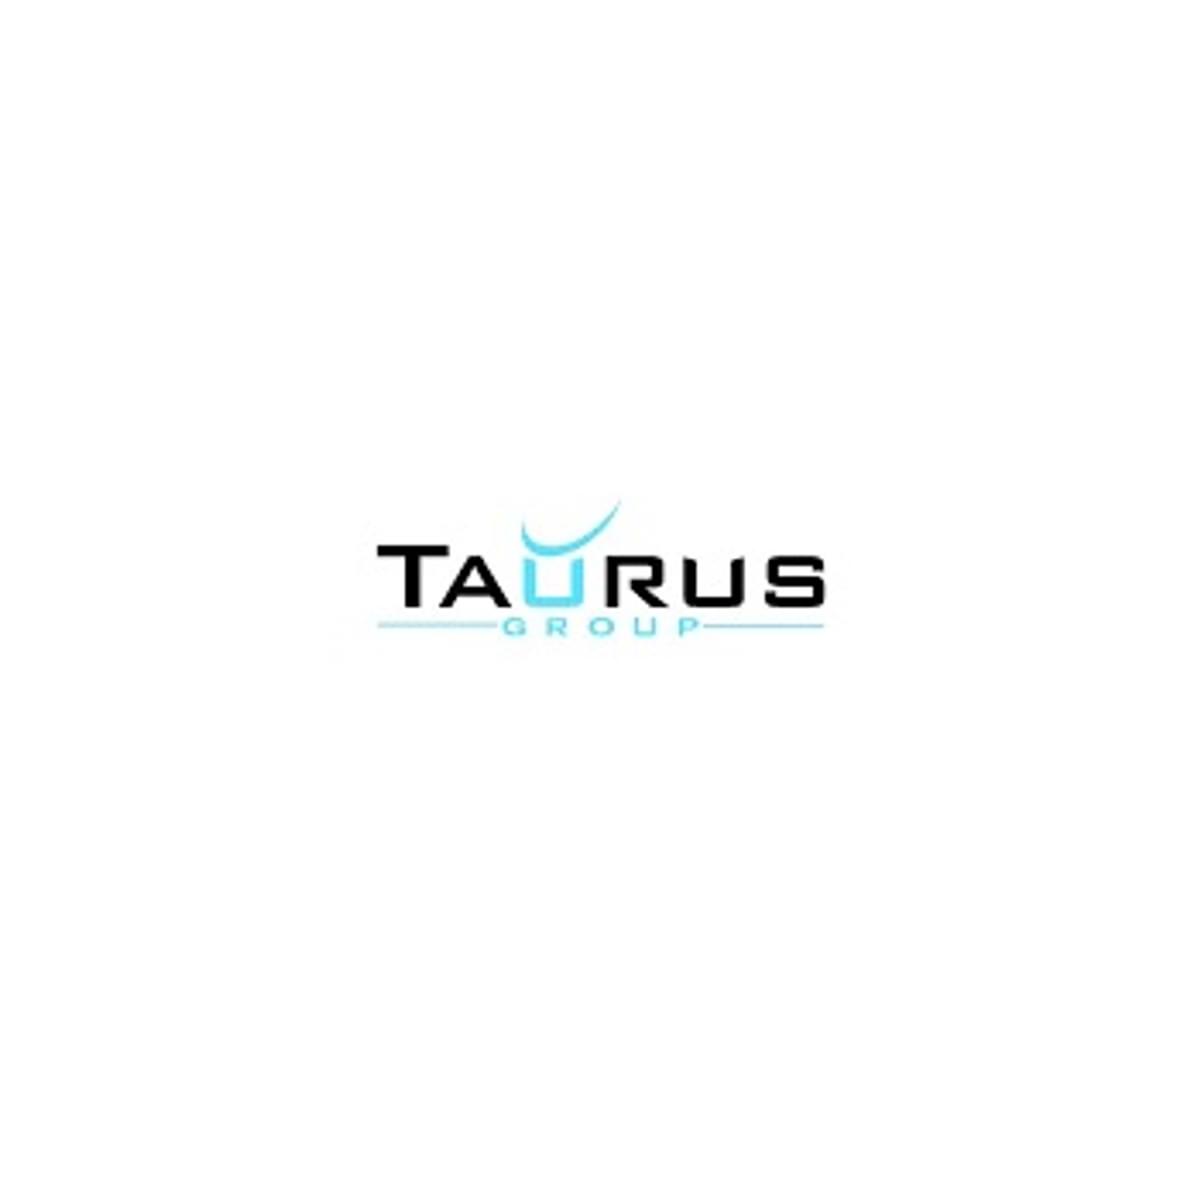 Taurus Group koopt HPC specialist ClusterVision image